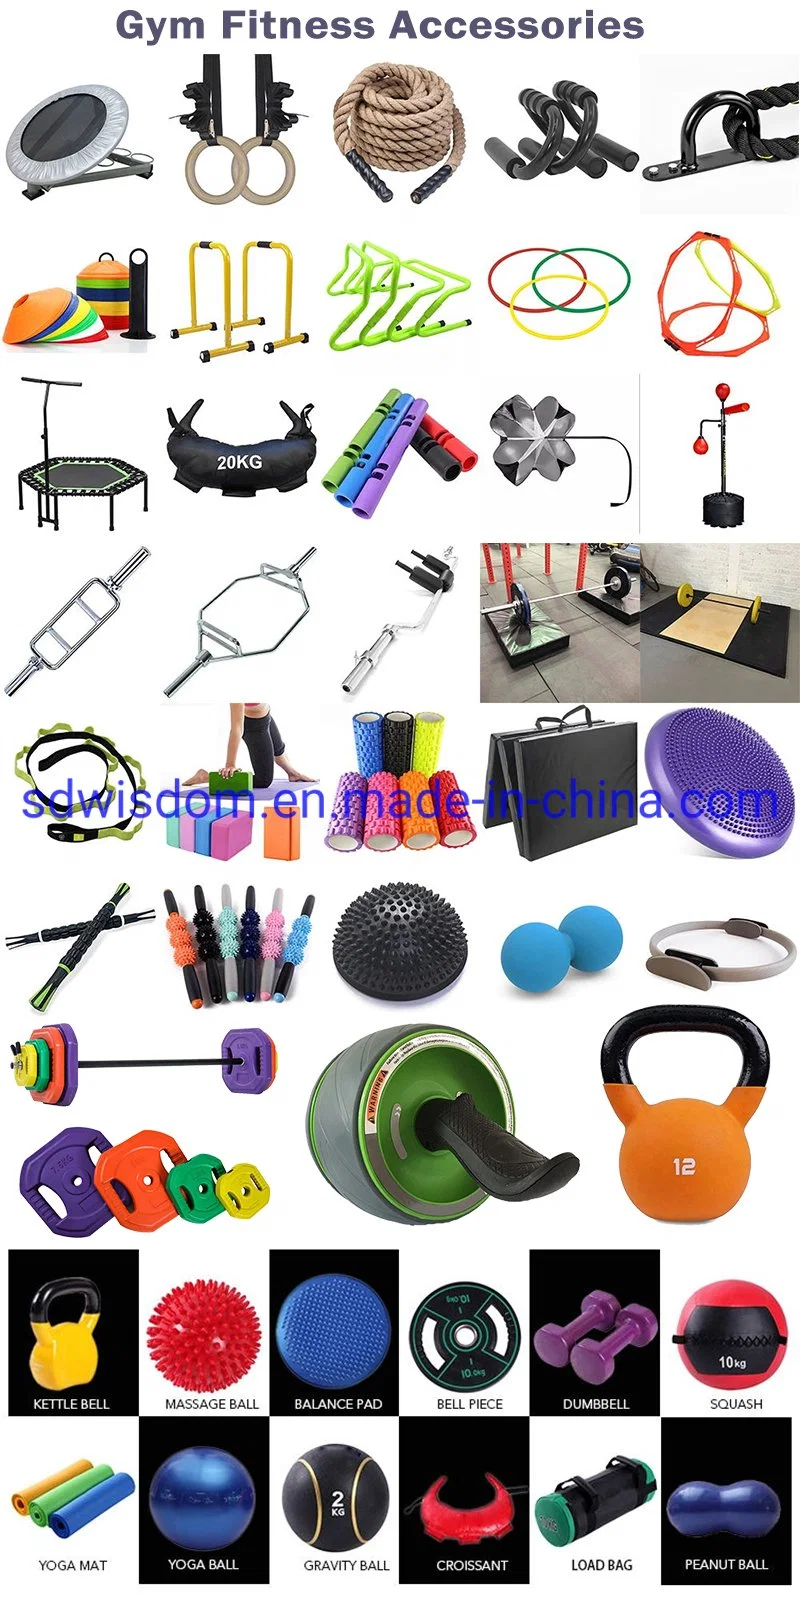 Gym Fitness Accessories Weight Lifting Sandbag / Power Bag Equipment